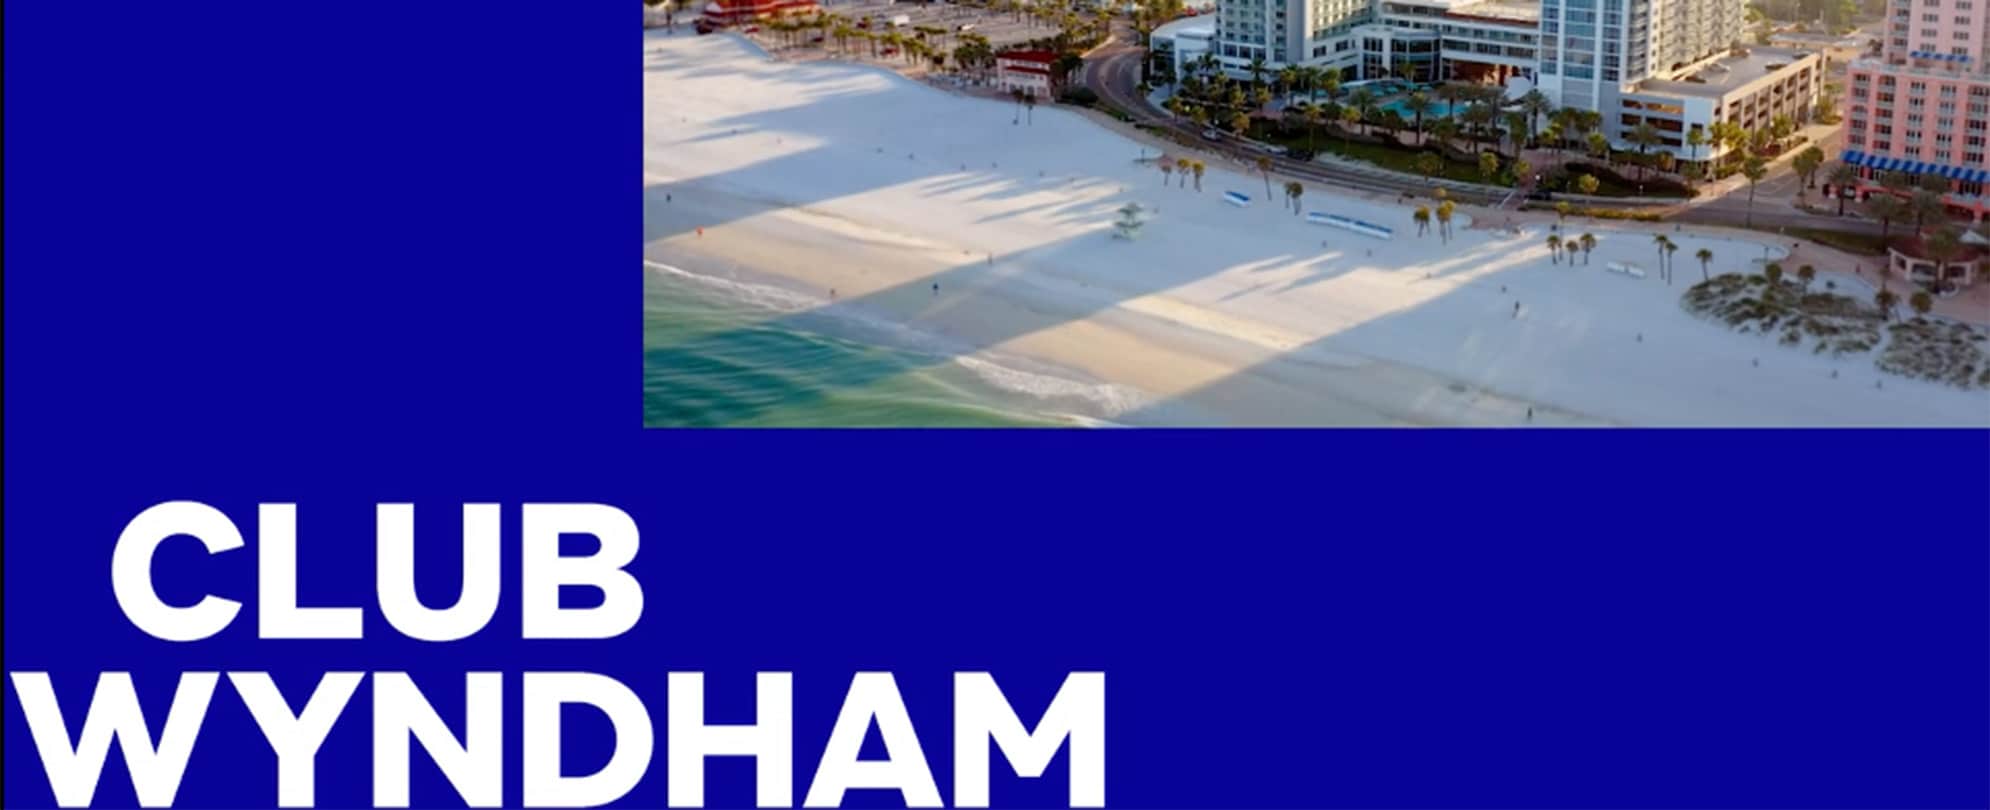 A Club Wyndham resort news video clip banner.